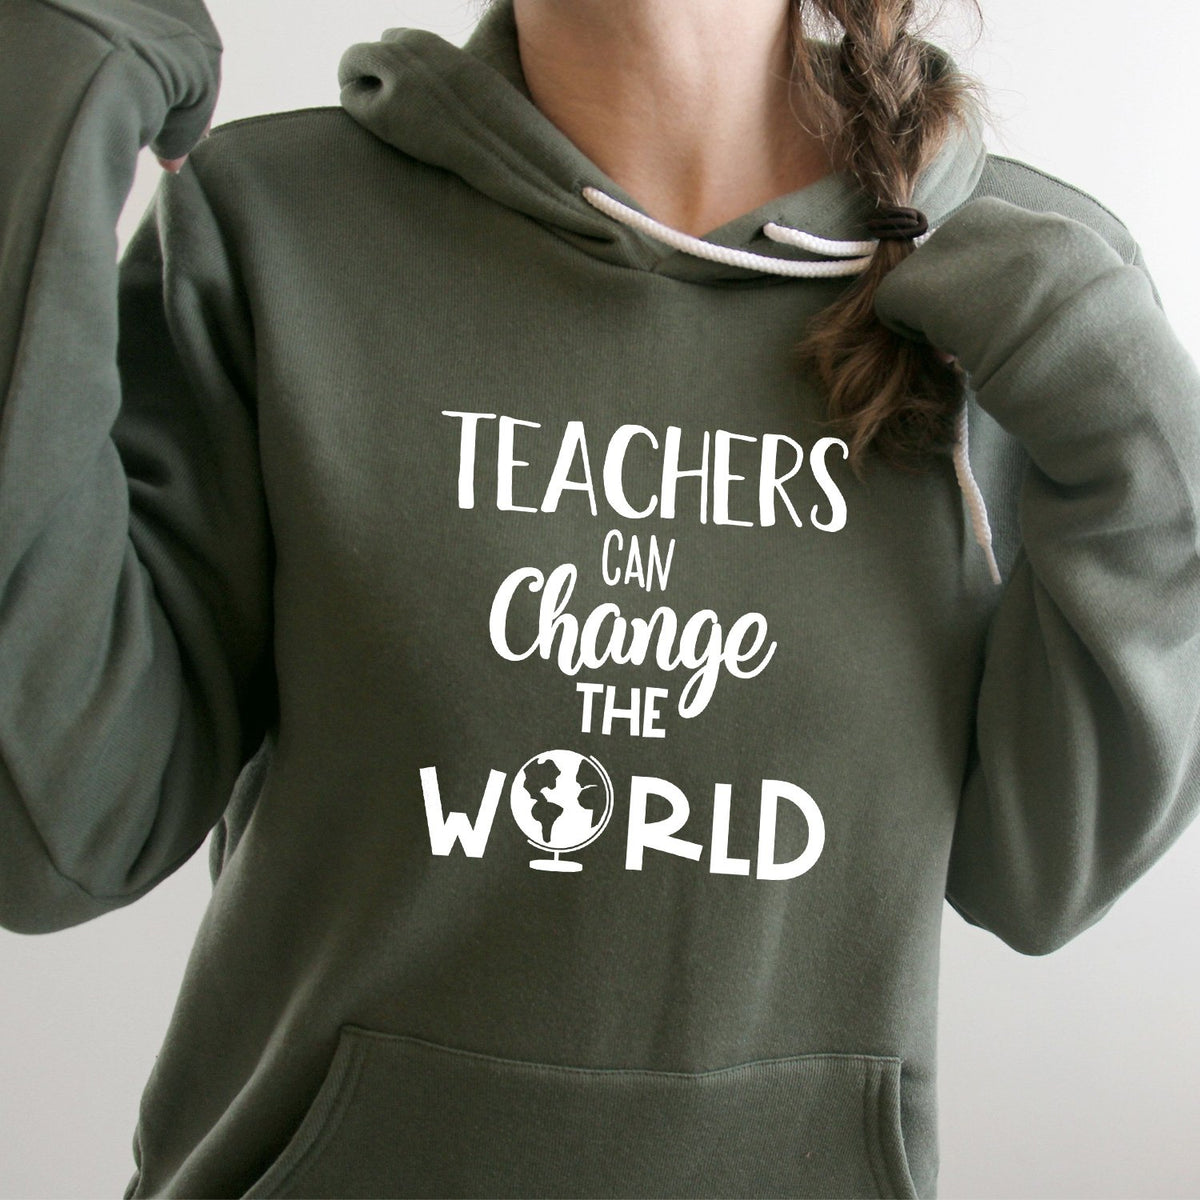 Teachers Can Change the World - Hoodie Sweatshirt